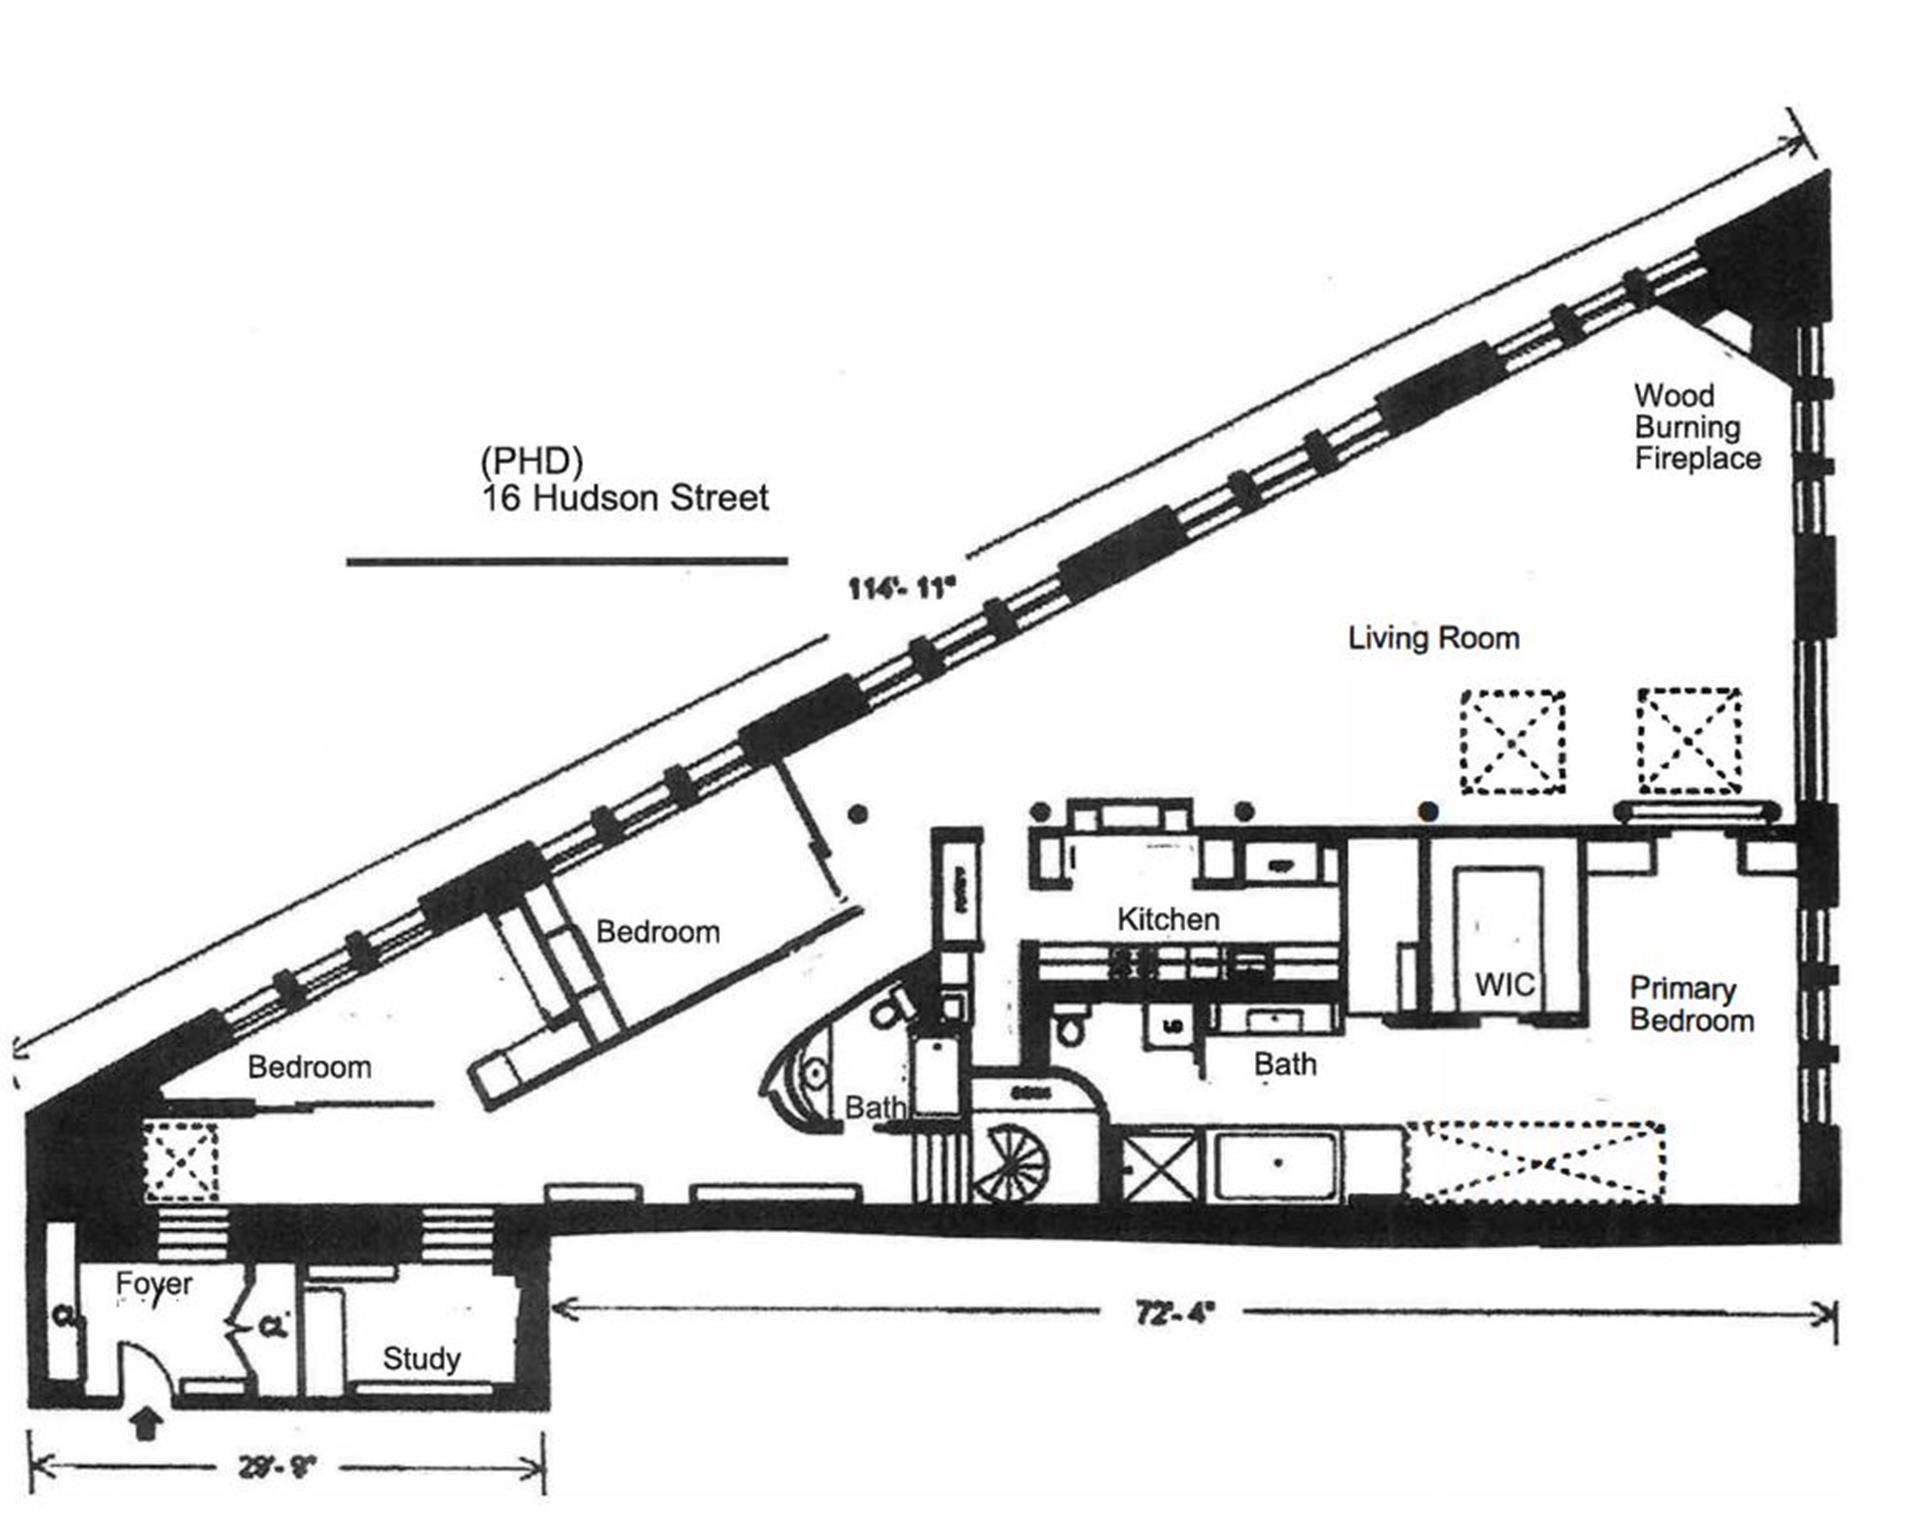 Floorplan for 16 Hudson Street, PHD